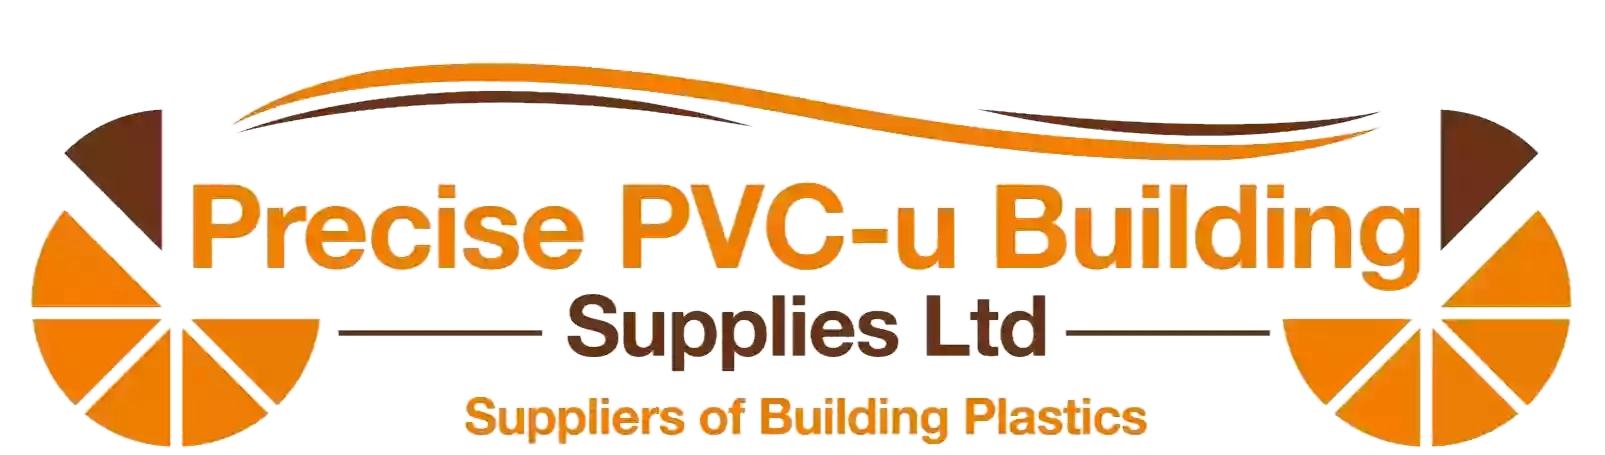 Precise PVC-u Building Supplies Ltd